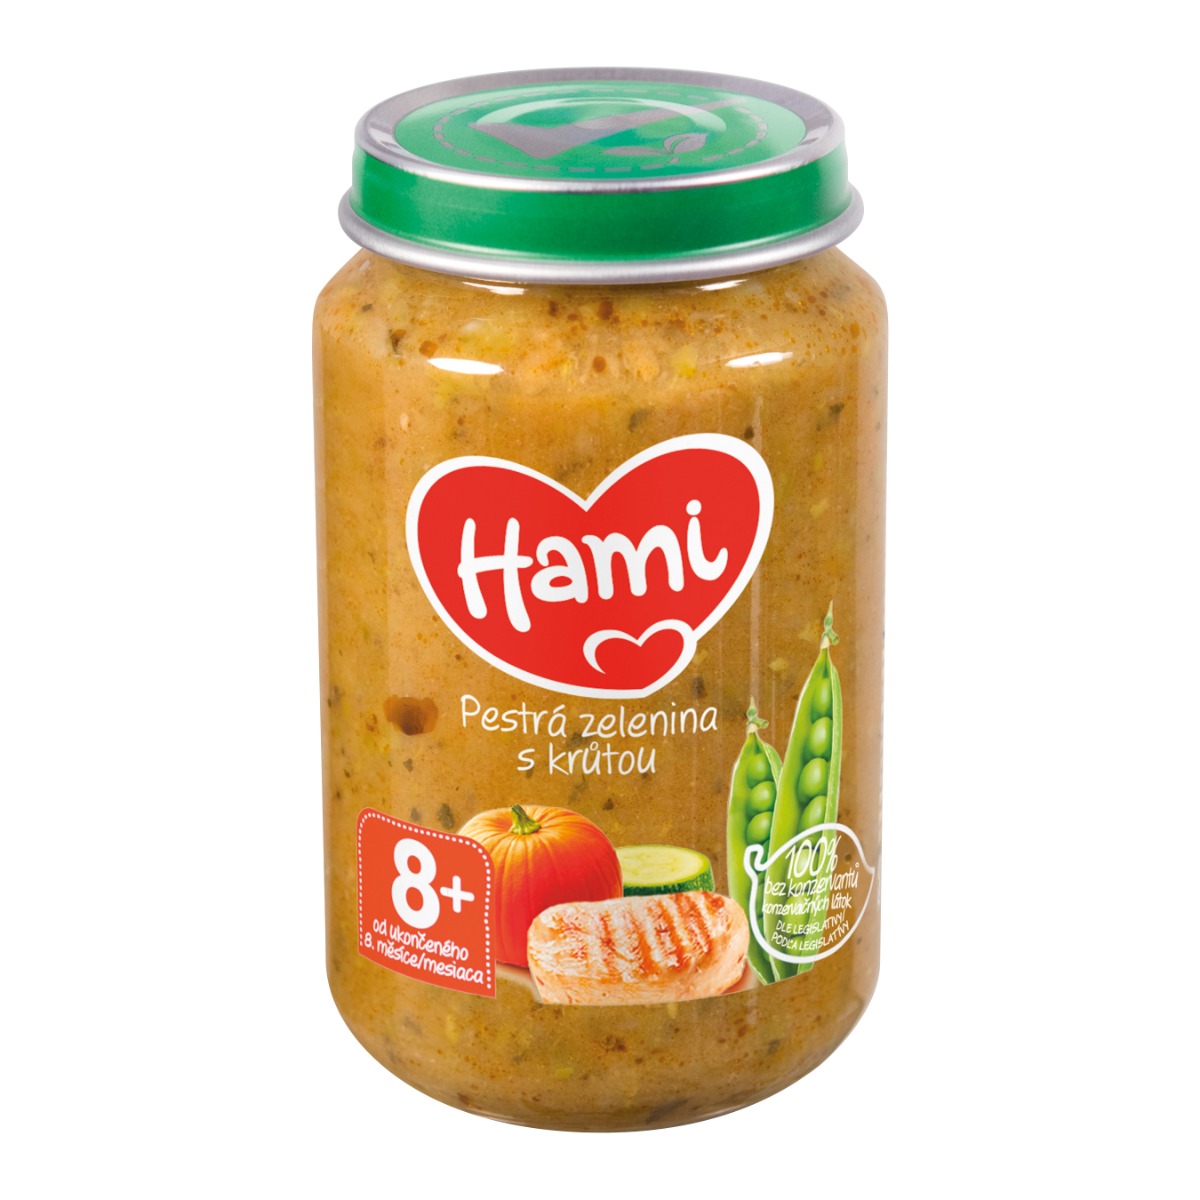 Hami Pestrá zelenina s krůtou 8+ 200 g Hami